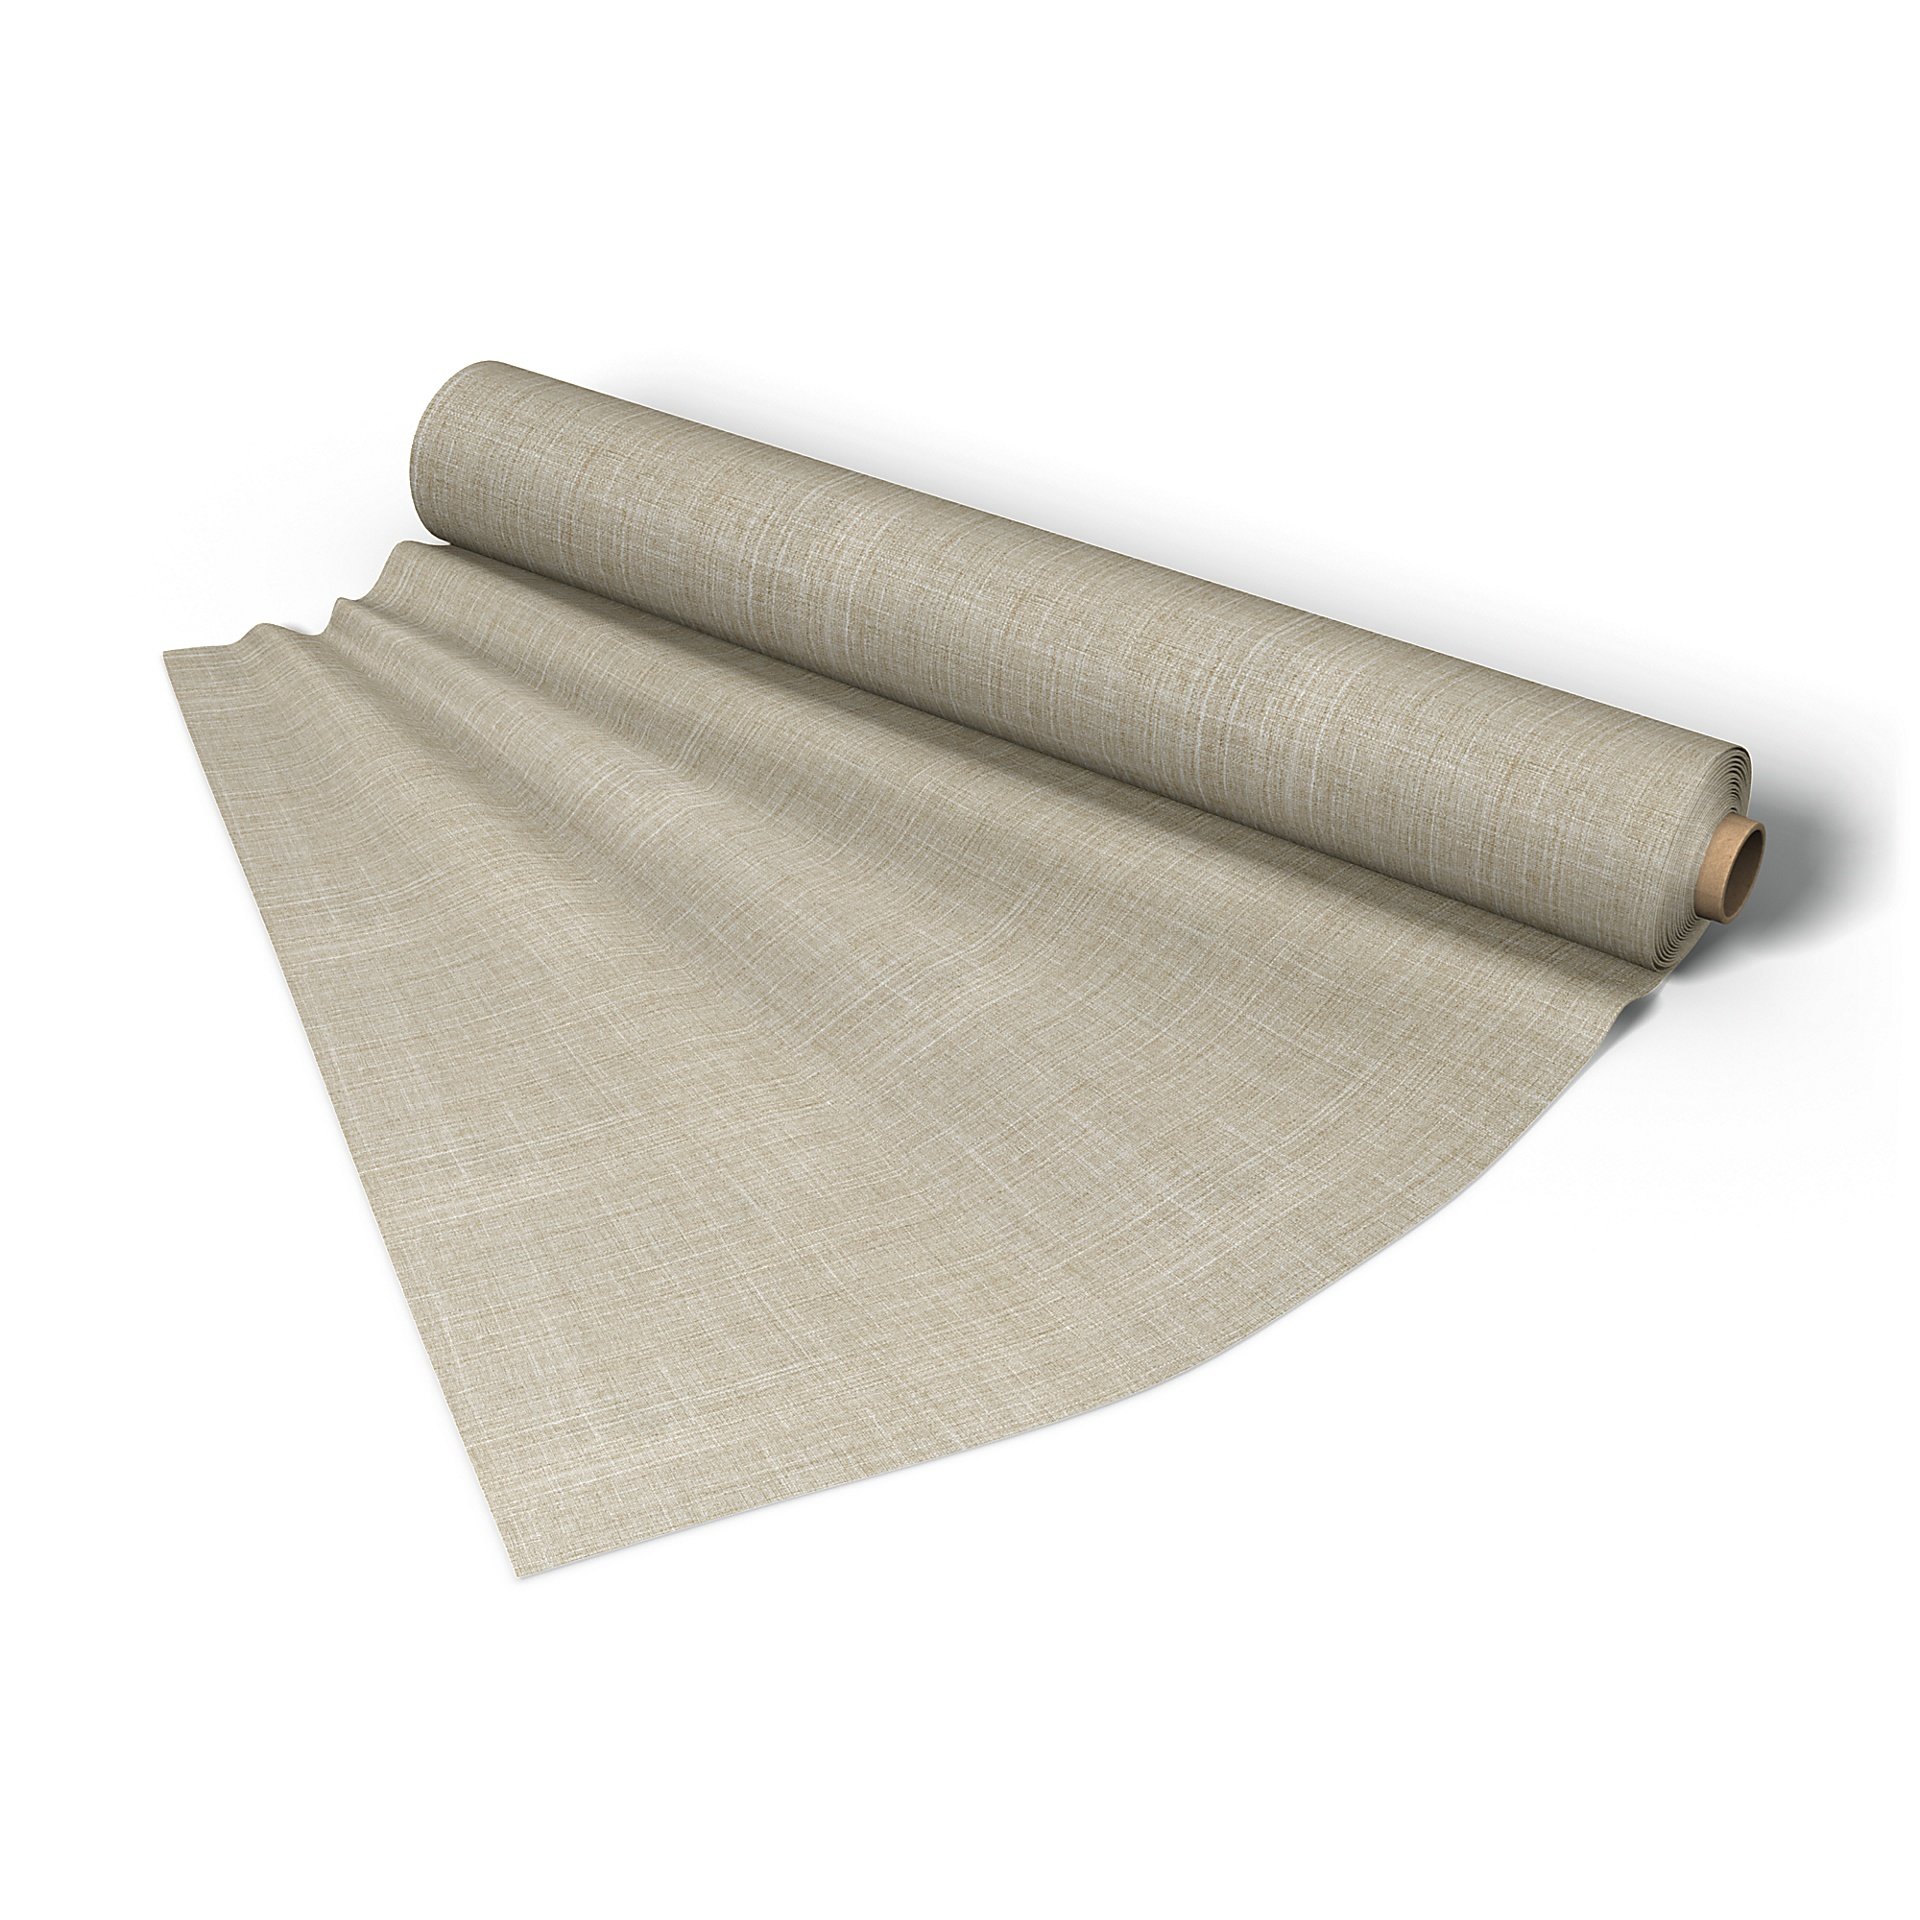 Fabric per metre, Sand Beige, Boucle & Texture - Bemz